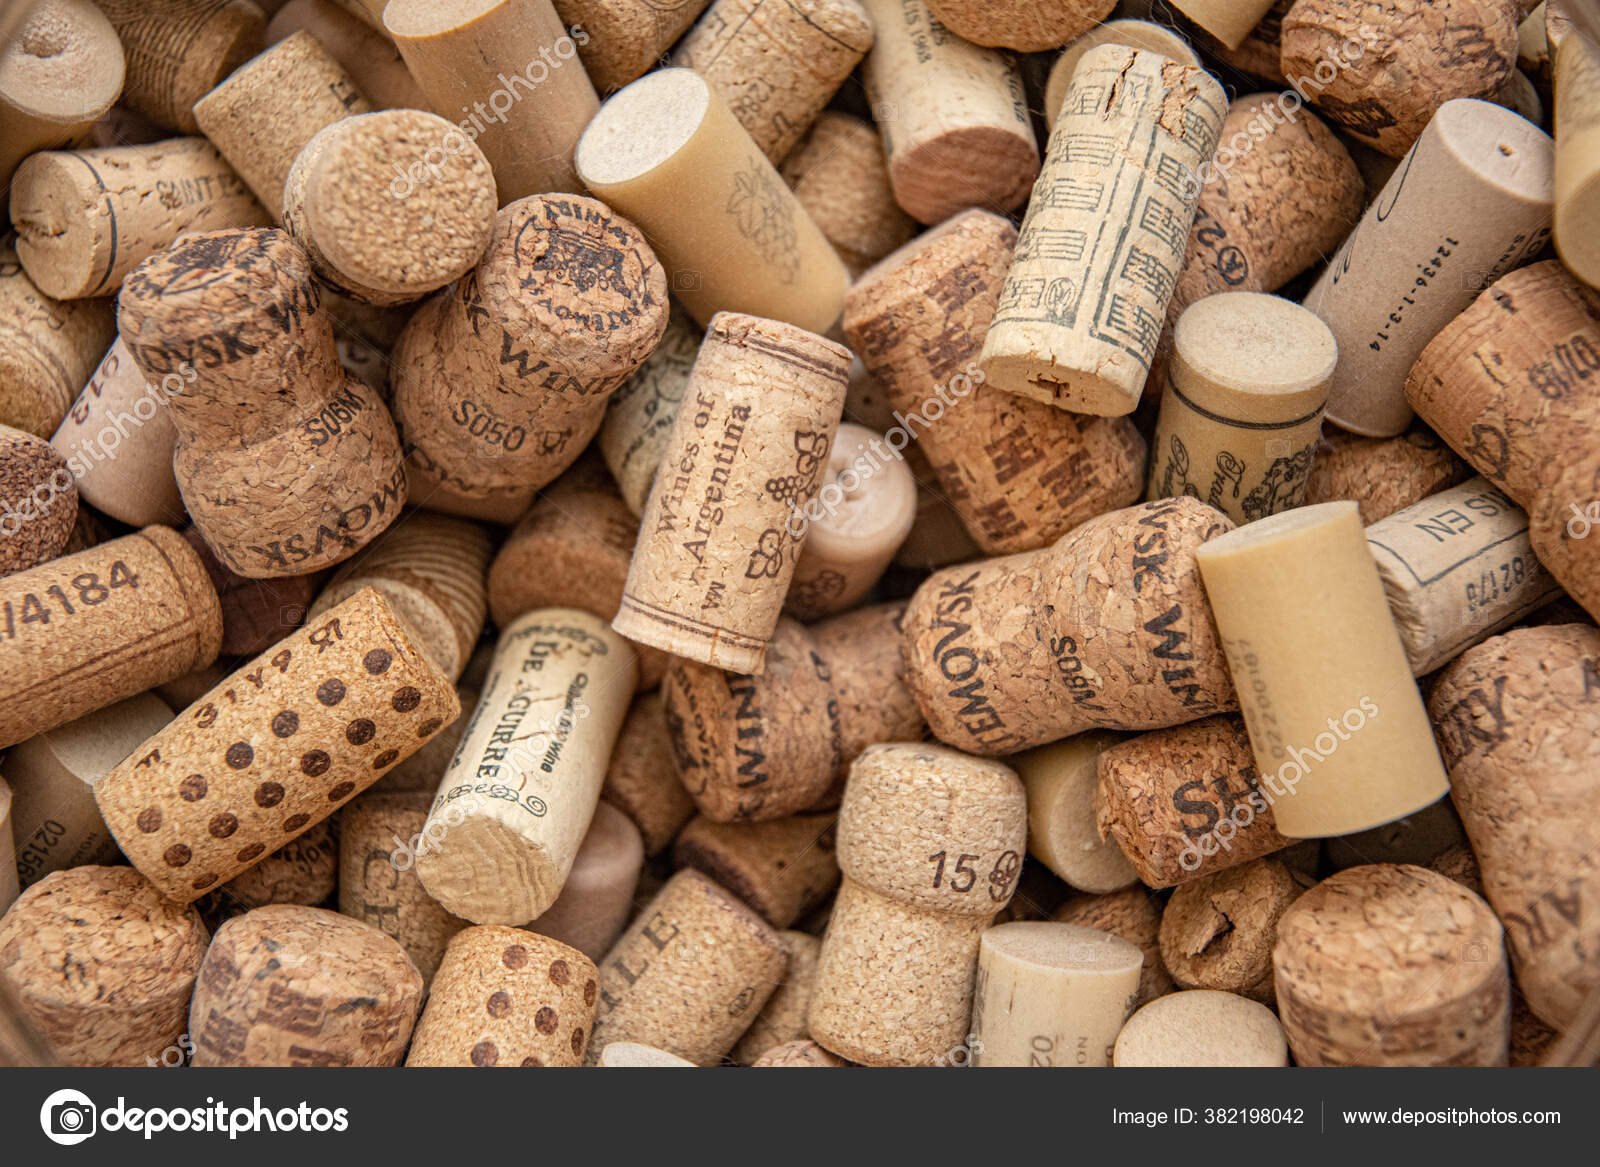 depositphotos_382198042-stock-photo-old-wine-corks-texture-closeup.jpg